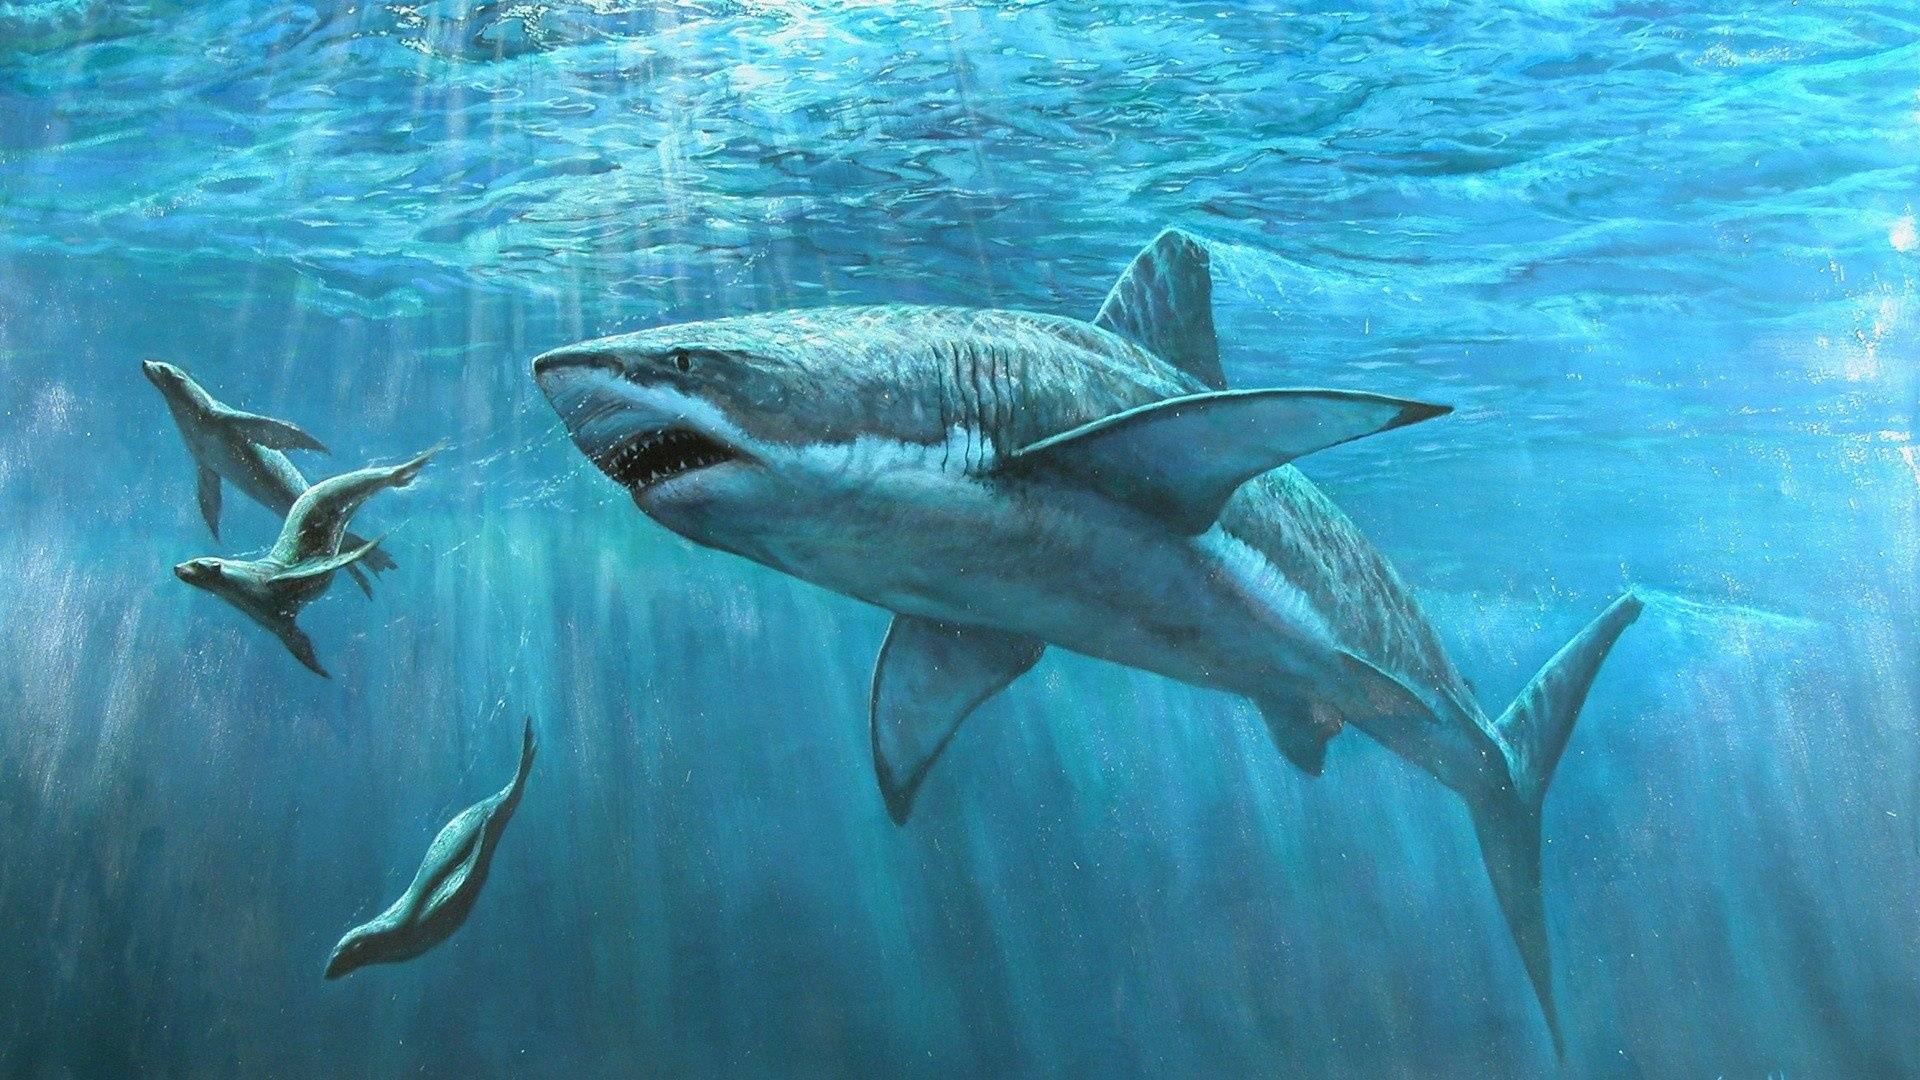 Wallpaper Fanart Screenshots Stuffpoint Fish Image Shark